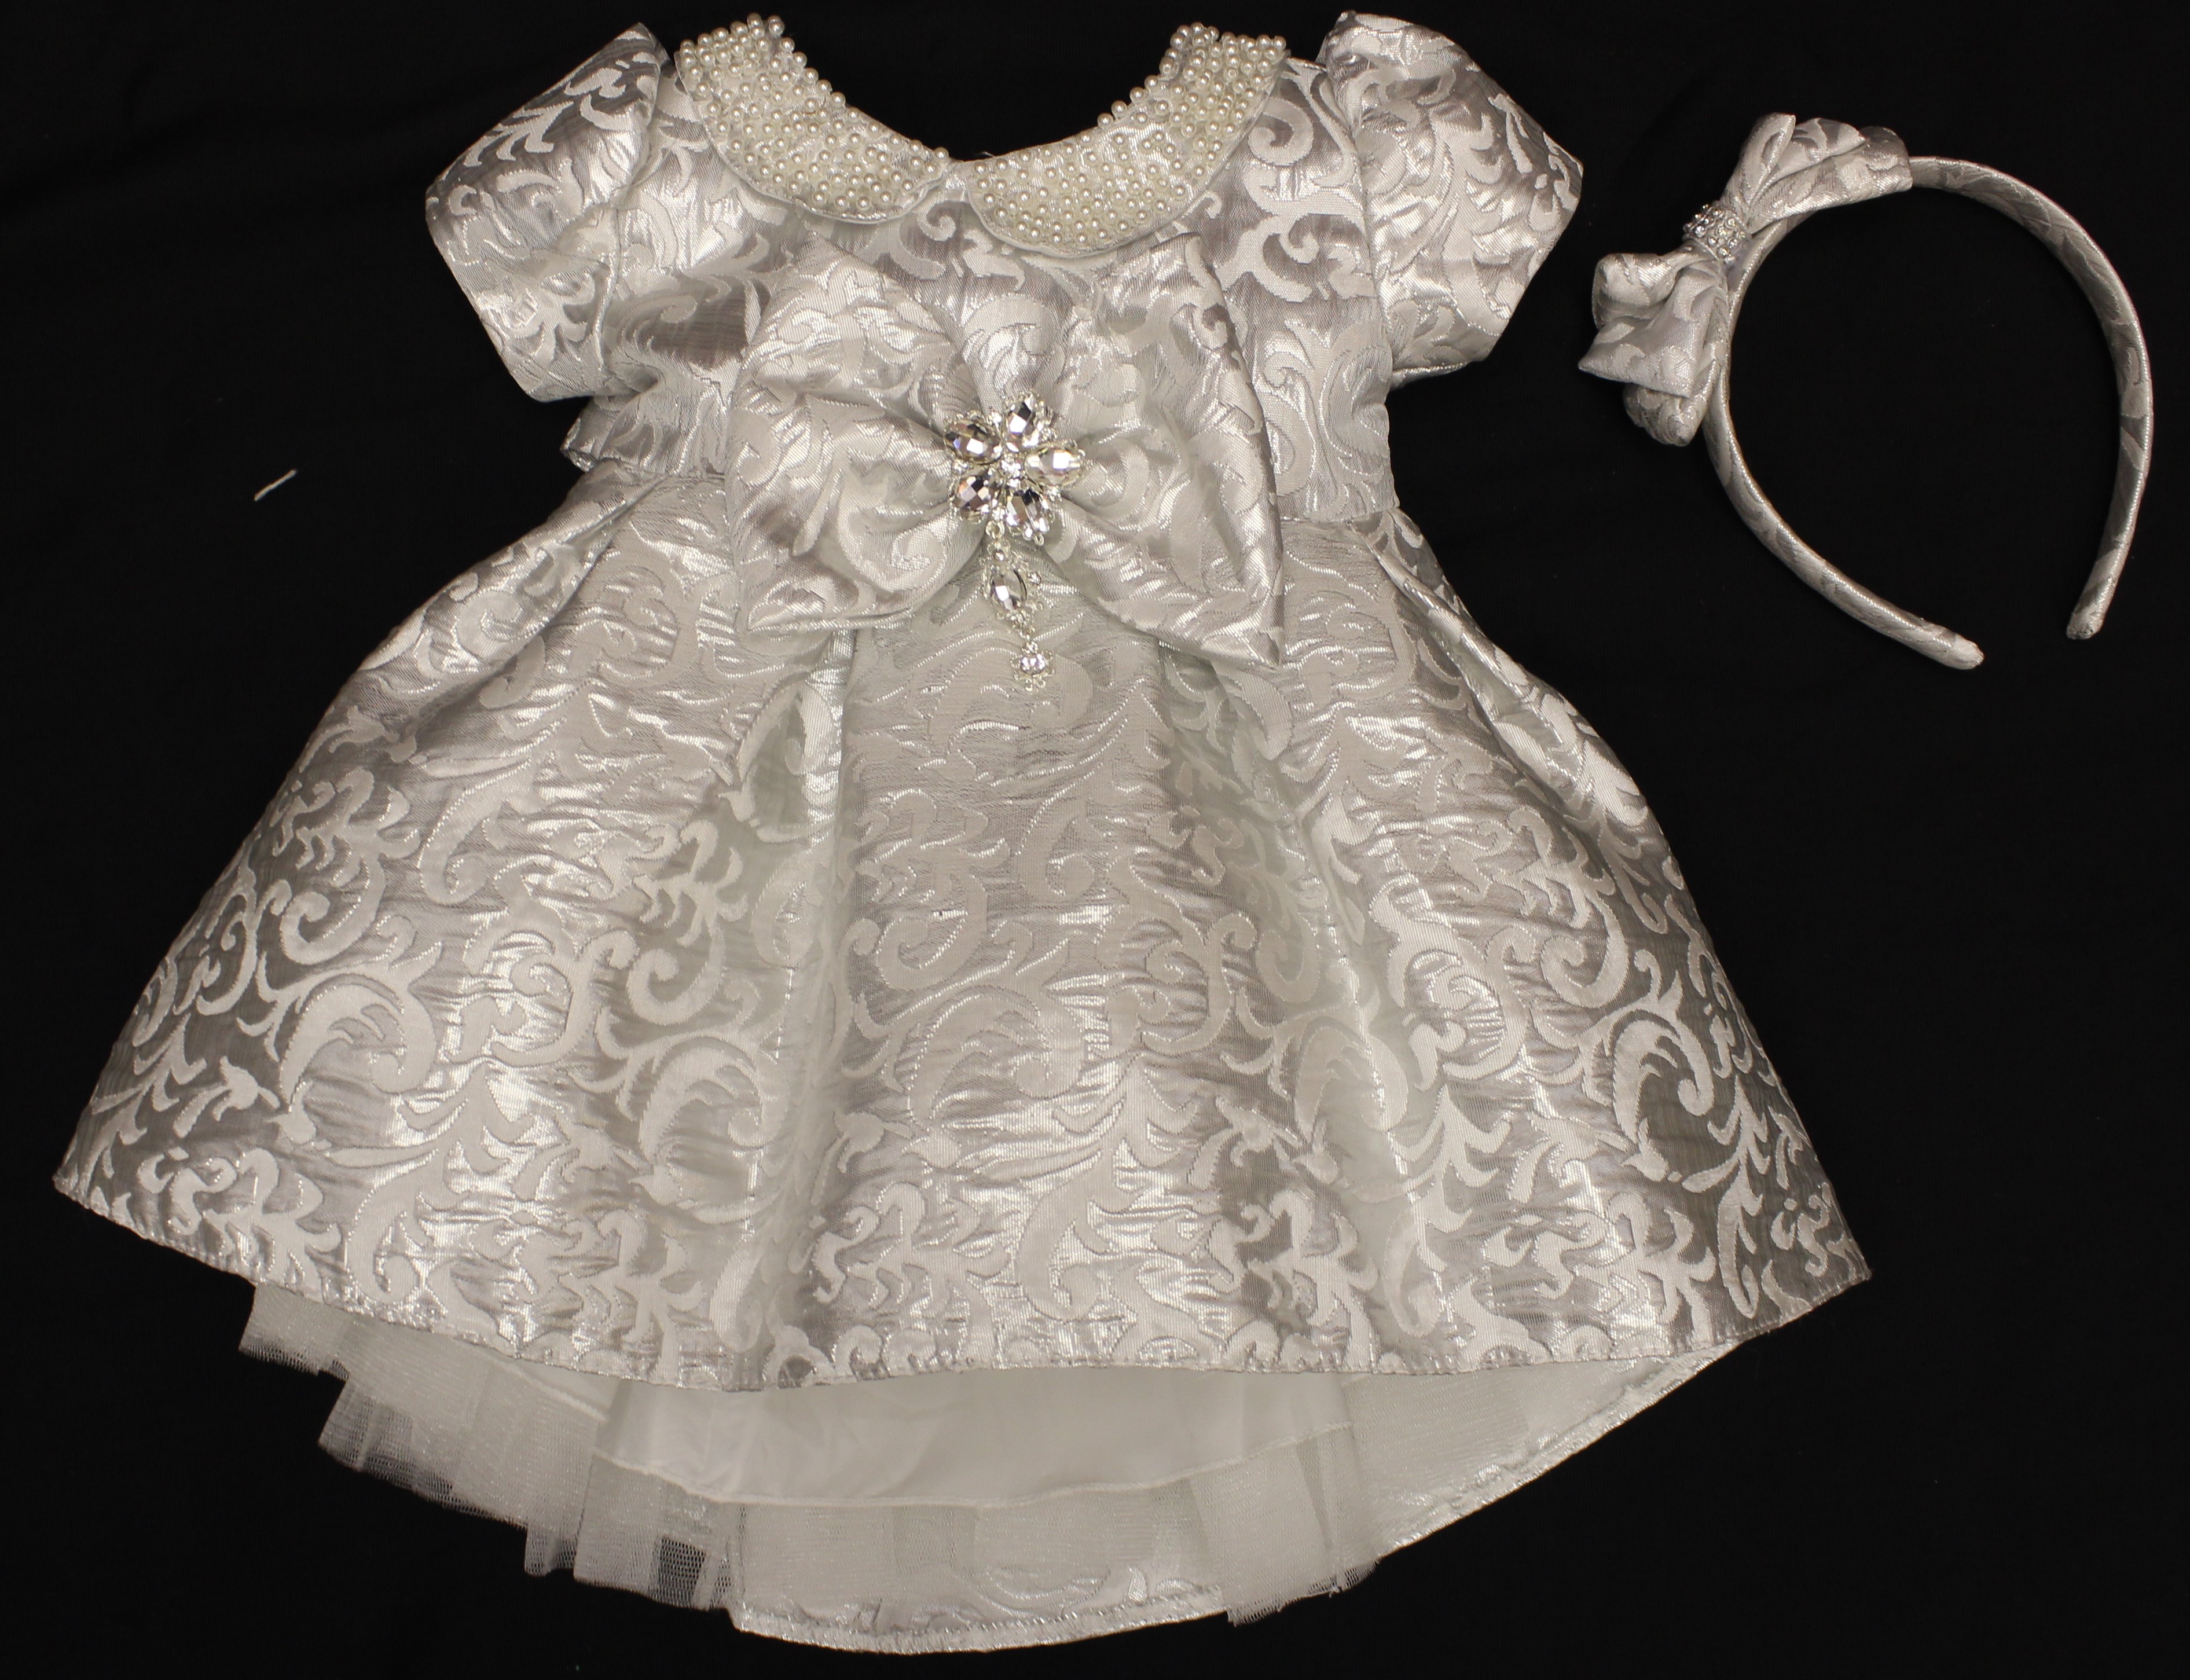 silver jacquard dress